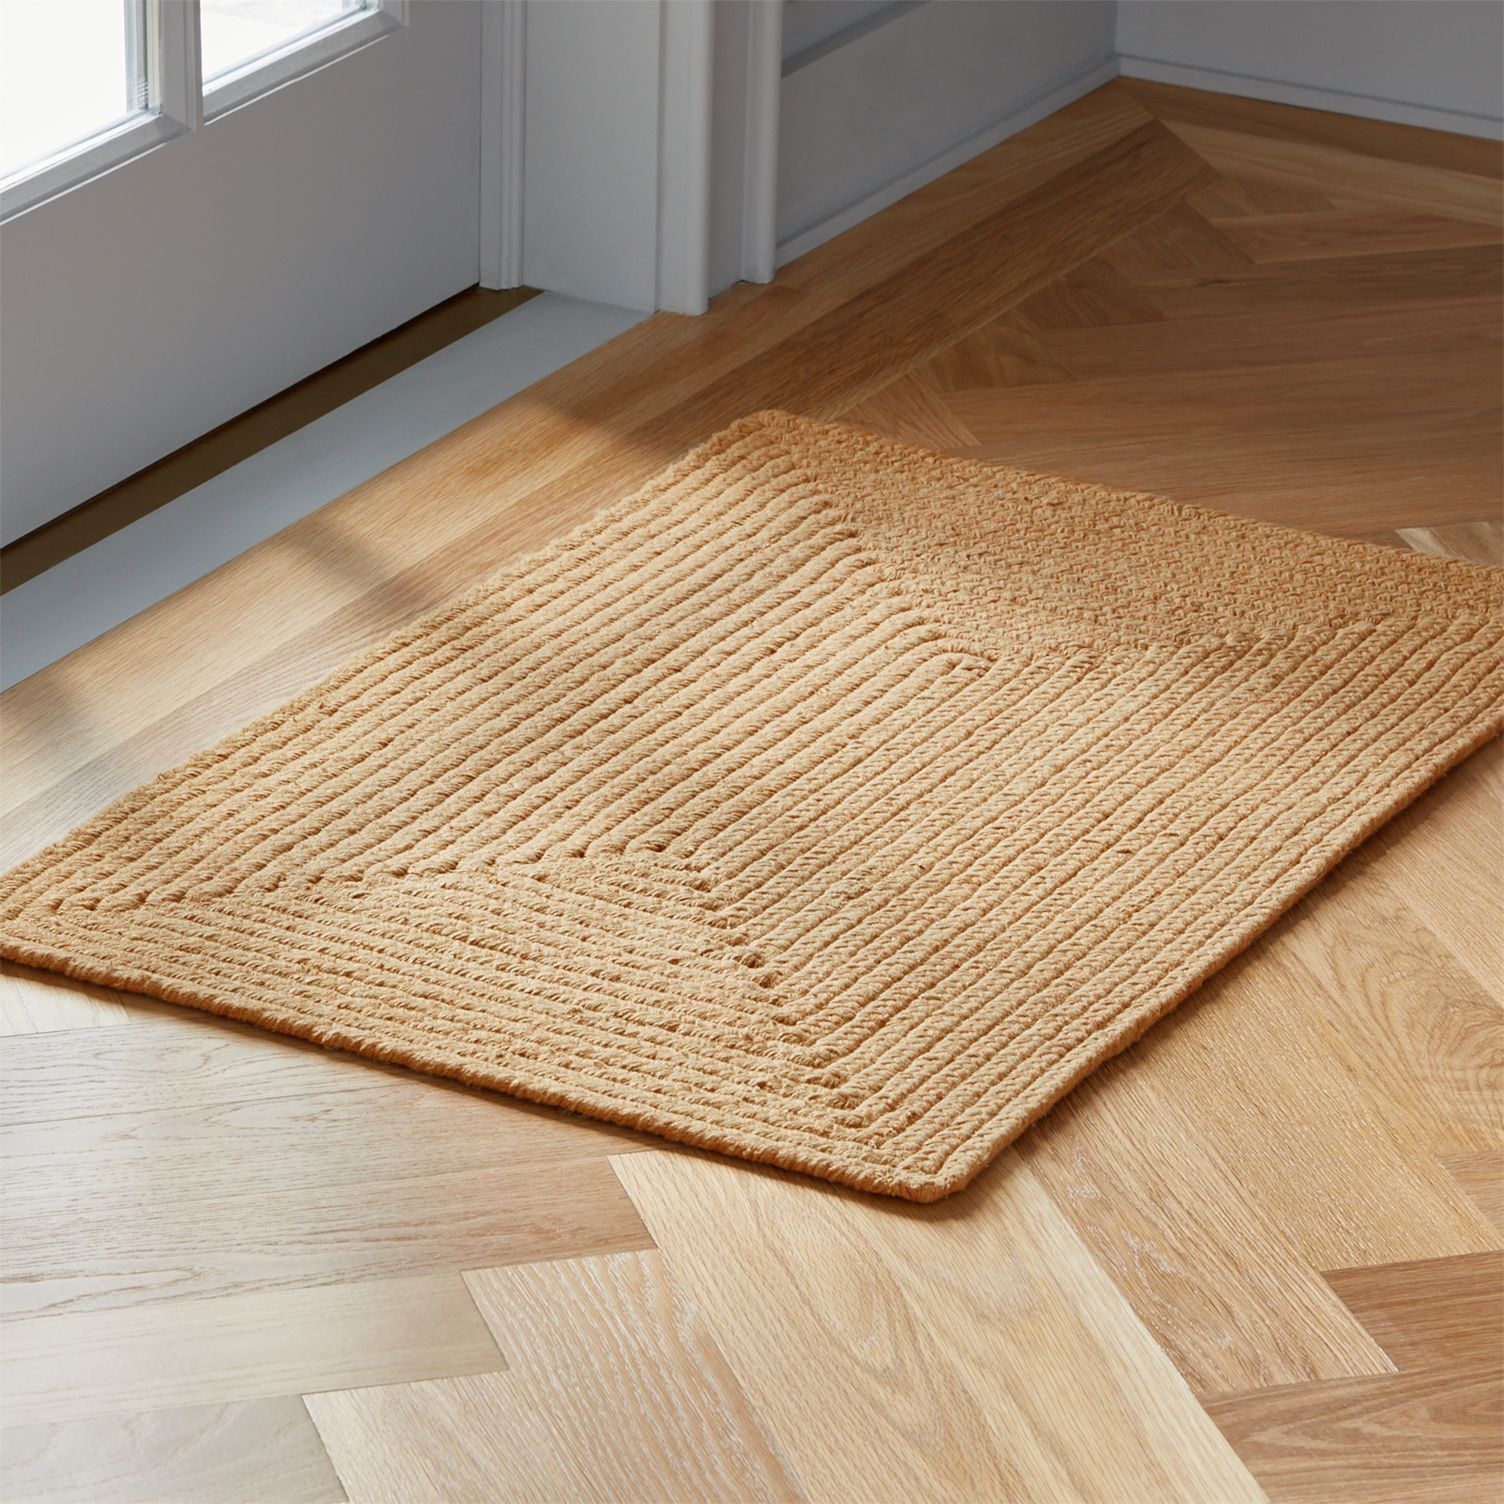 Use the Doormat on the Floor